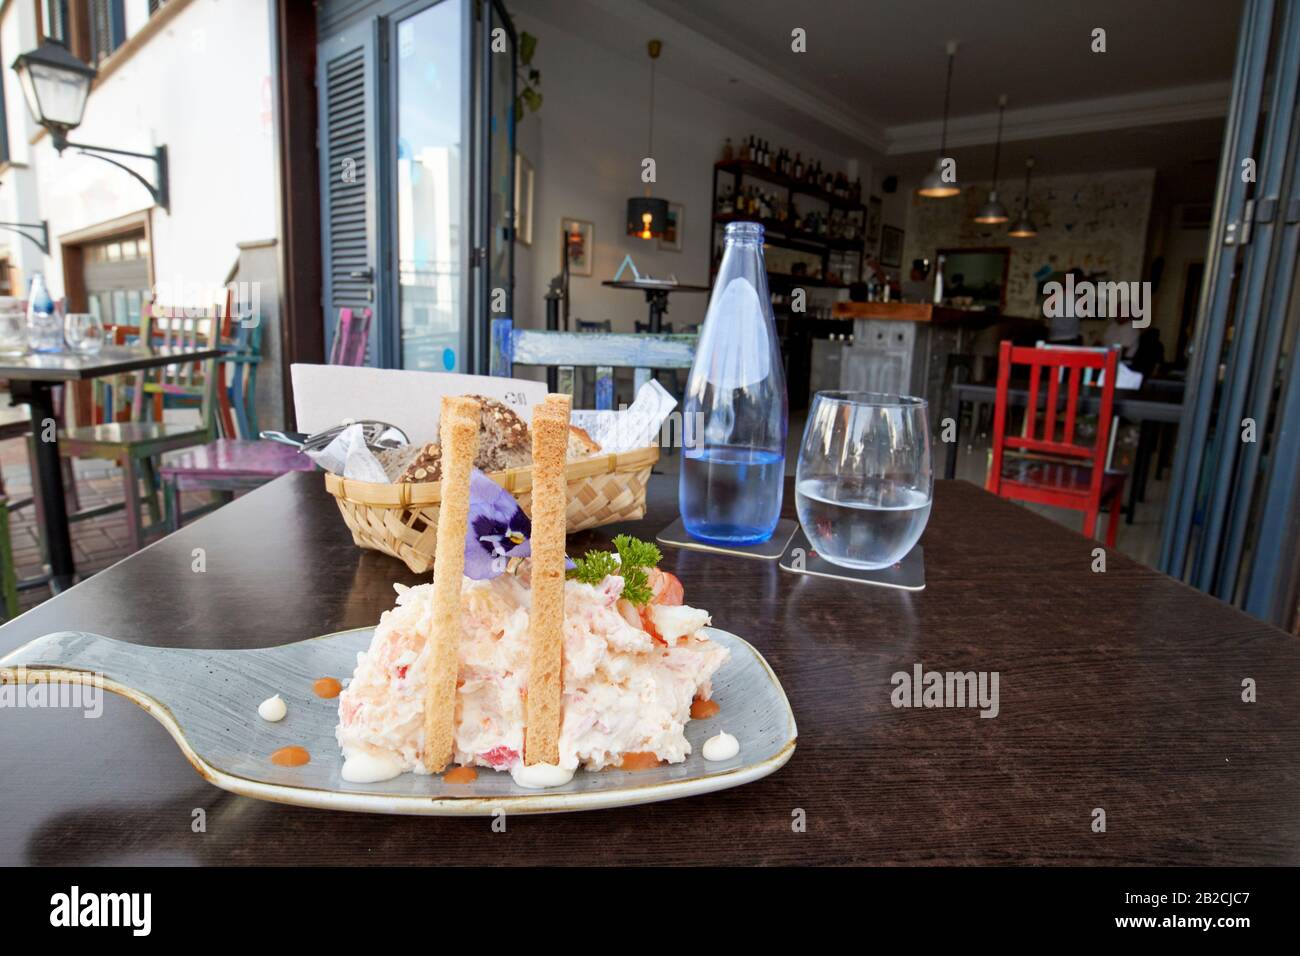 potato prawn and crab local salad ensaladilla in a small cafe Lanzarote canary islands spain Stock Photo